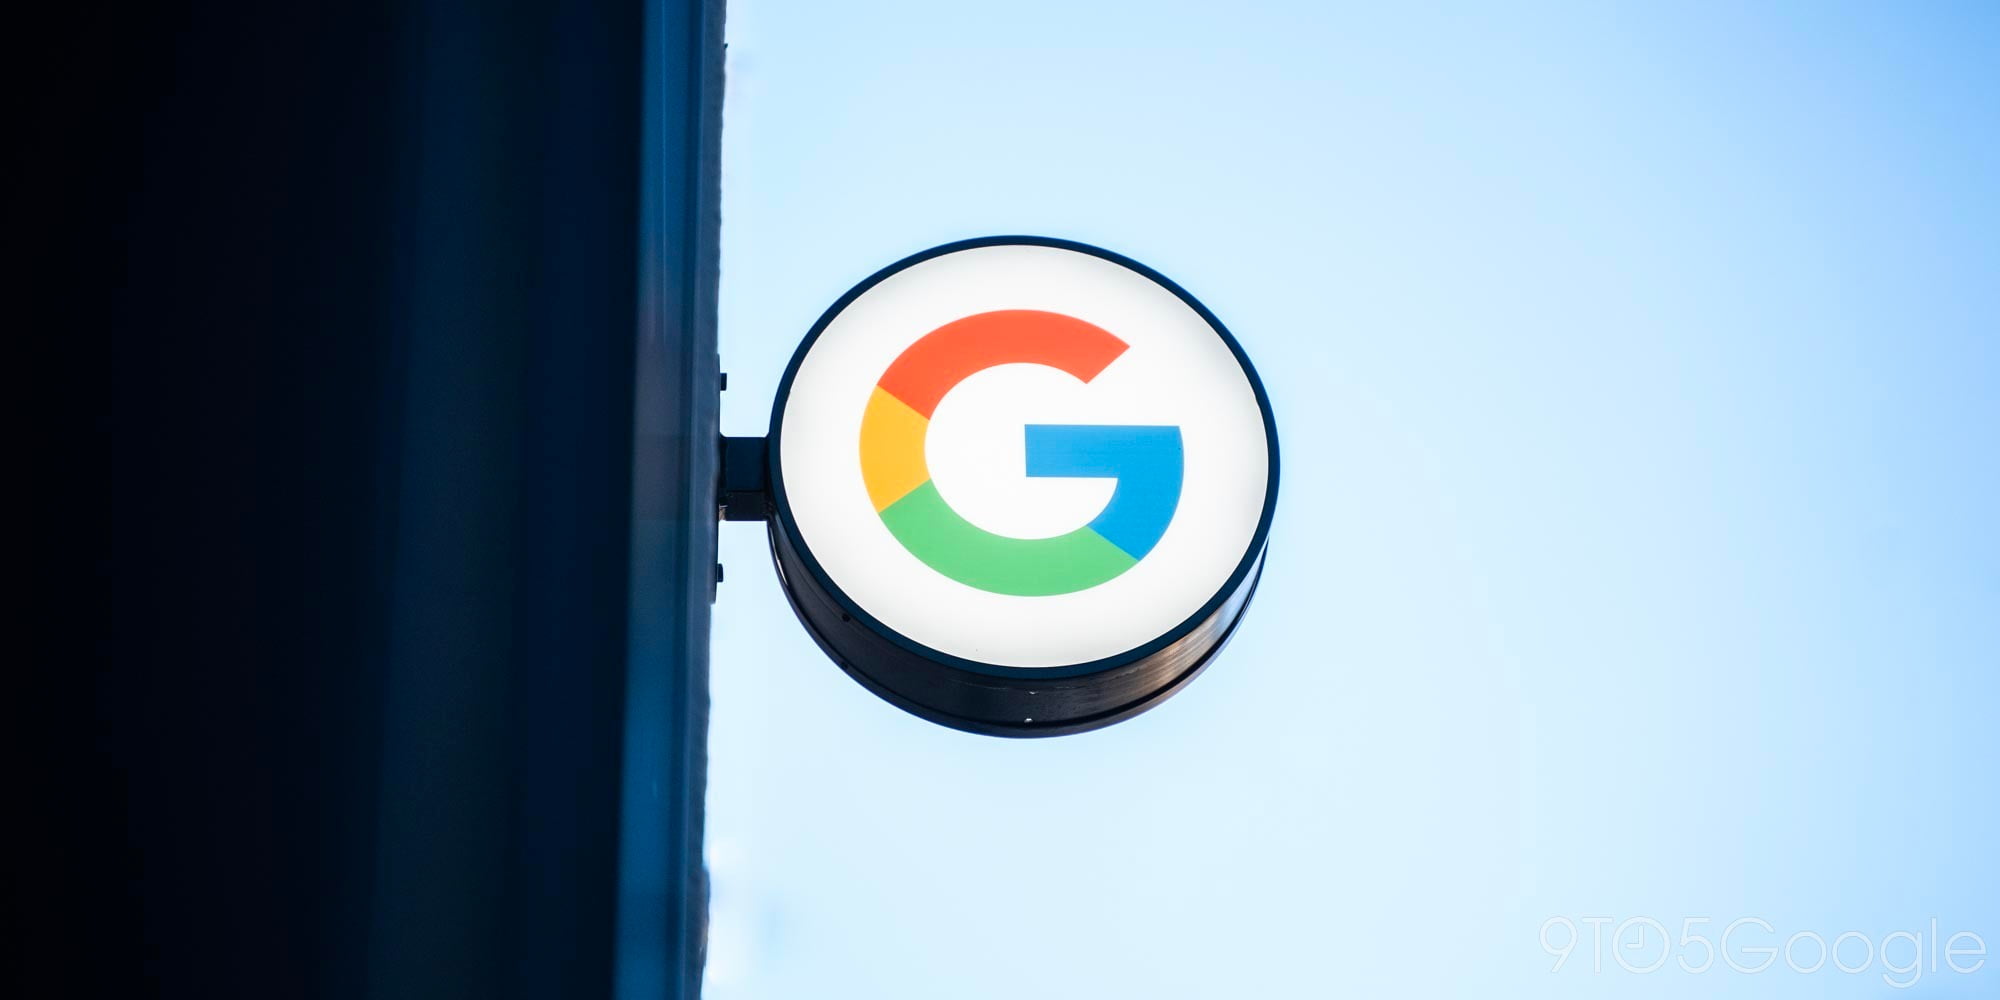 Google Pixel Slate specs